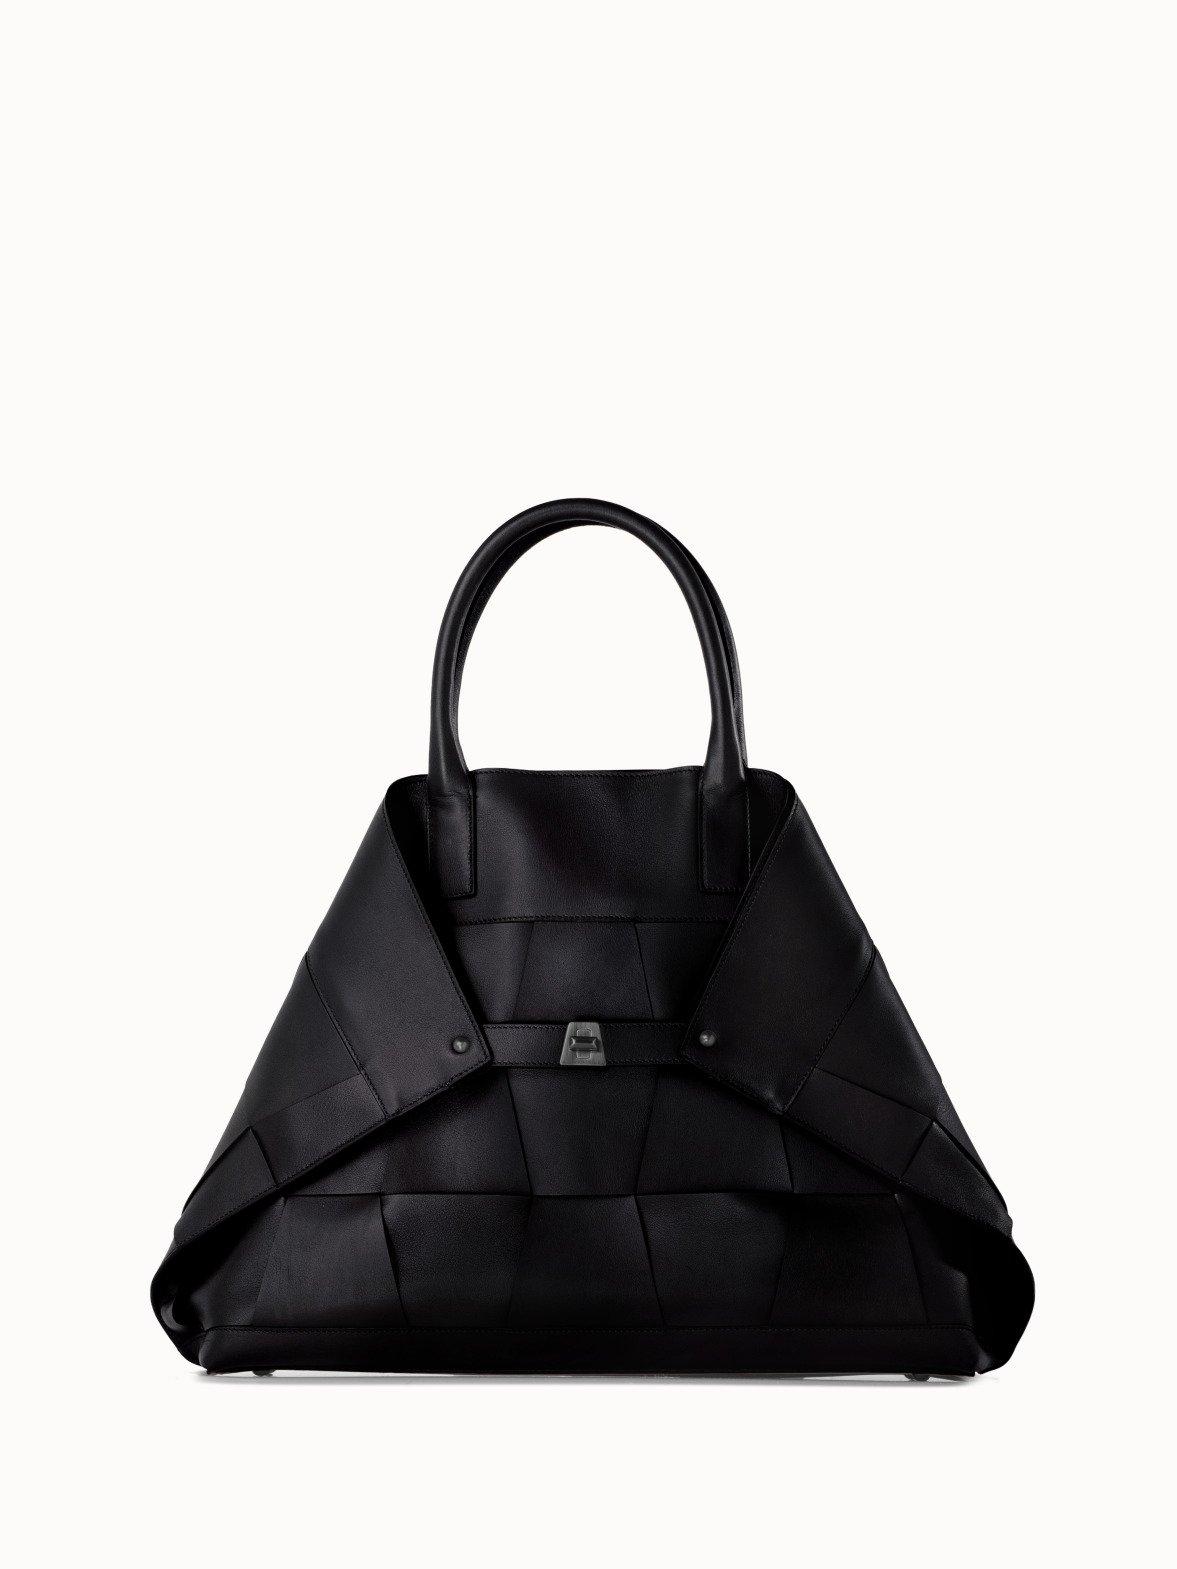 Akris Medium Leather Crossbody Braided Trapezoid Handbag in Black - Lyst